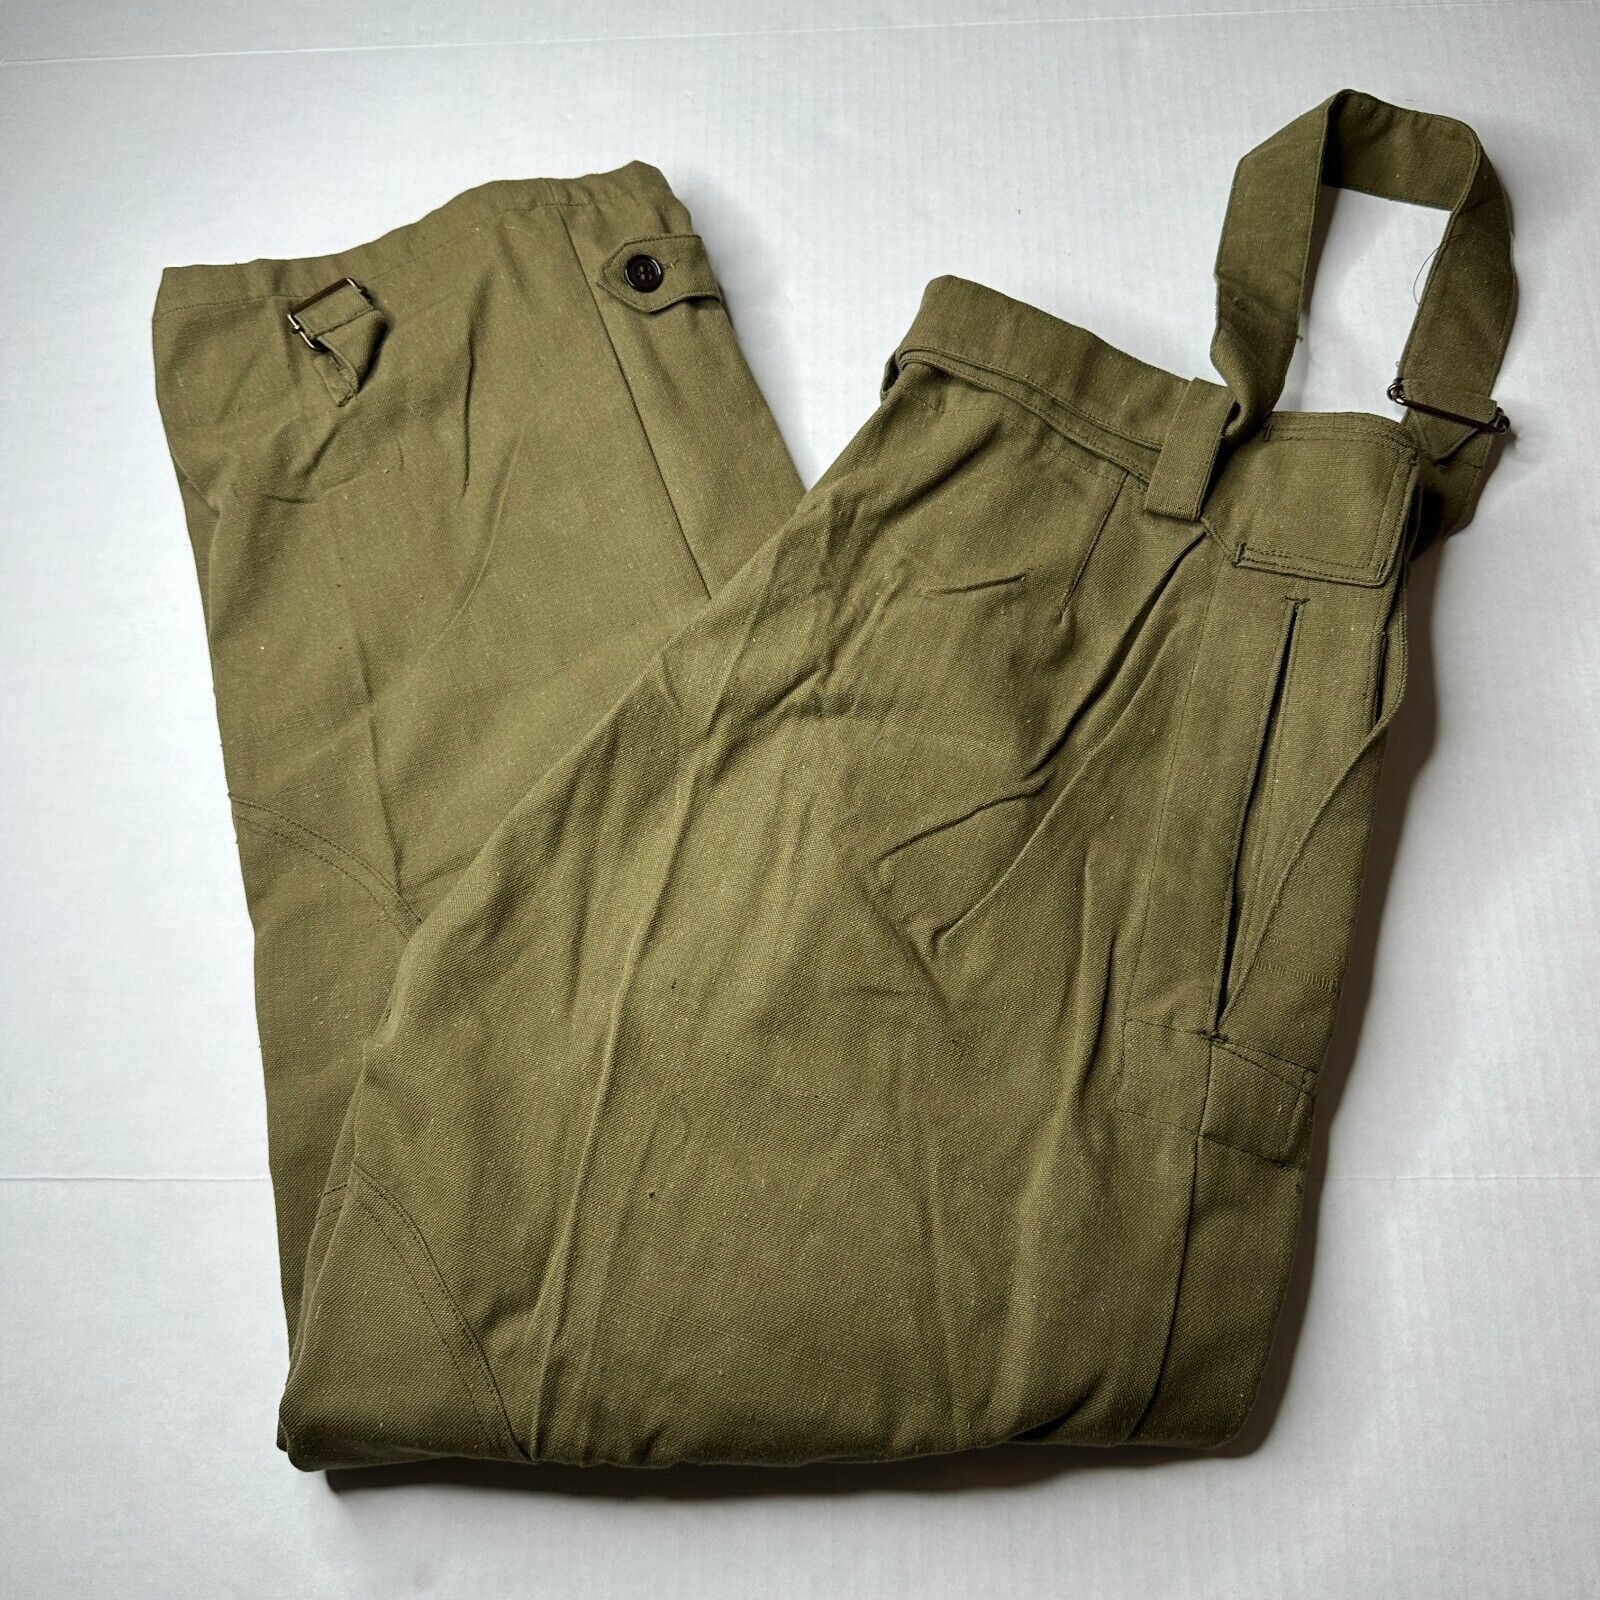 Vintage Mens British Army Military Uniform Trouser Pant